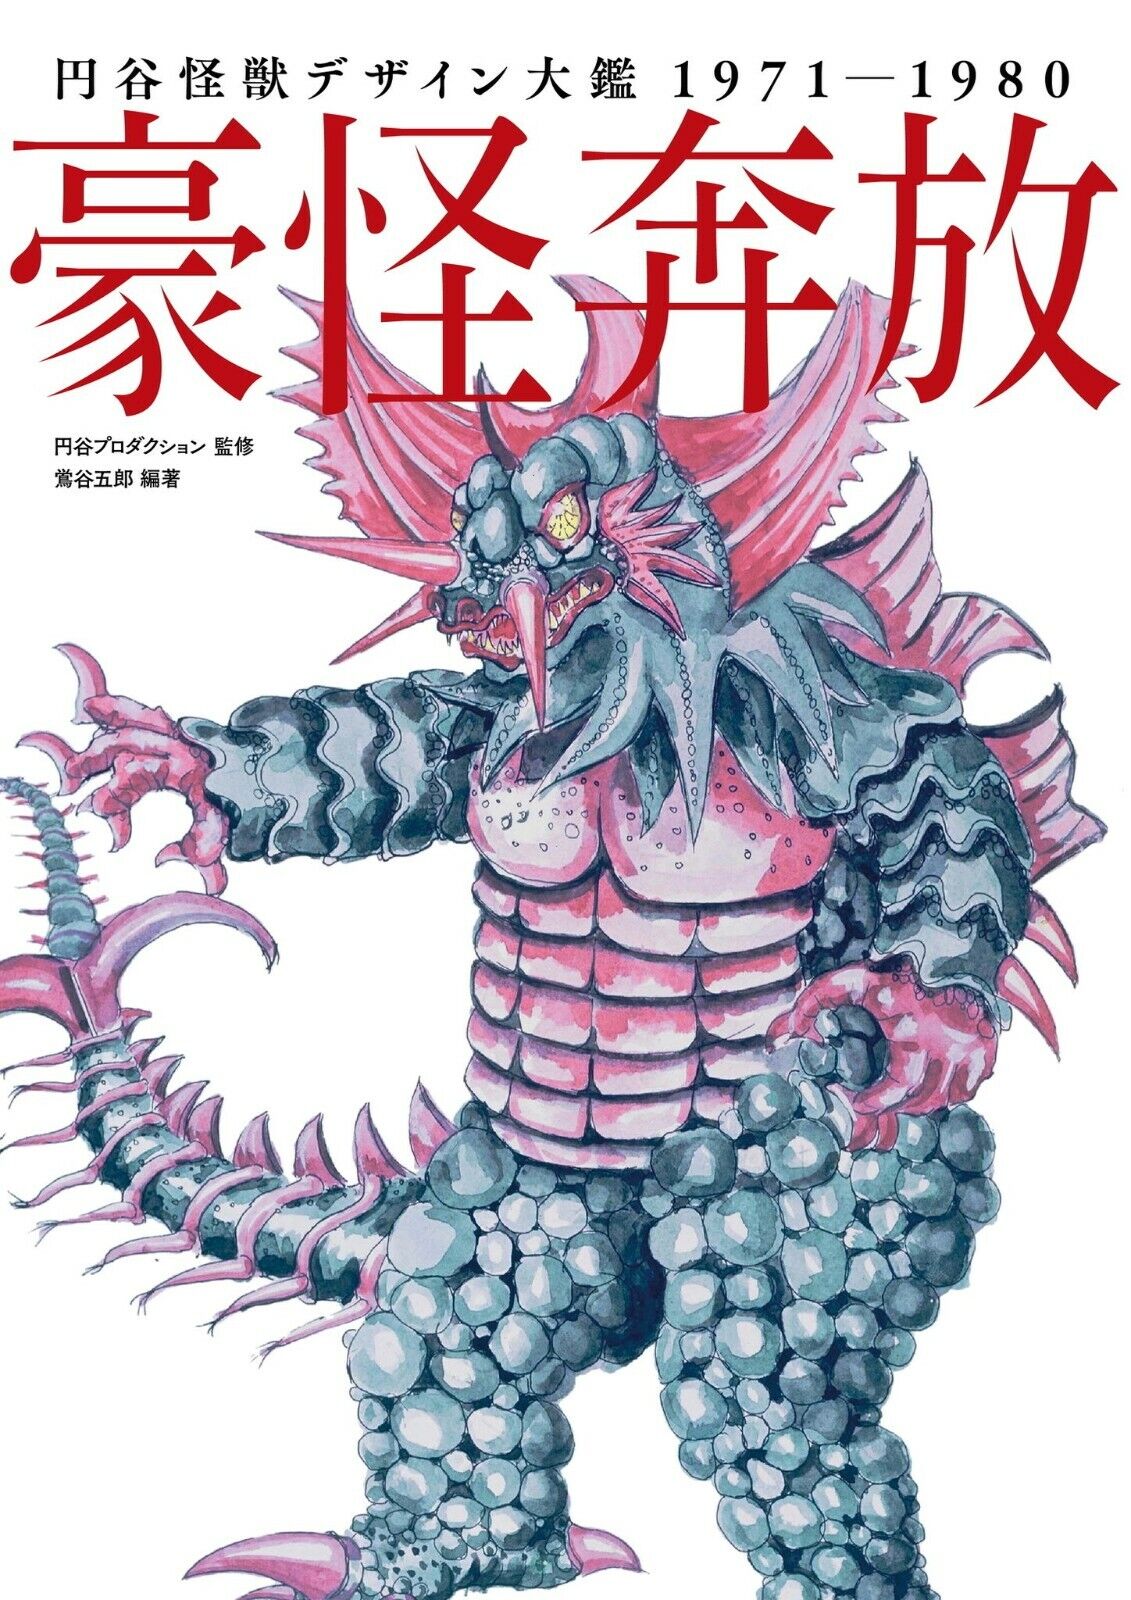 Tsuburaya Kaiju Design 1971 - 1980 Art Book Monster illustrated encyclopedia